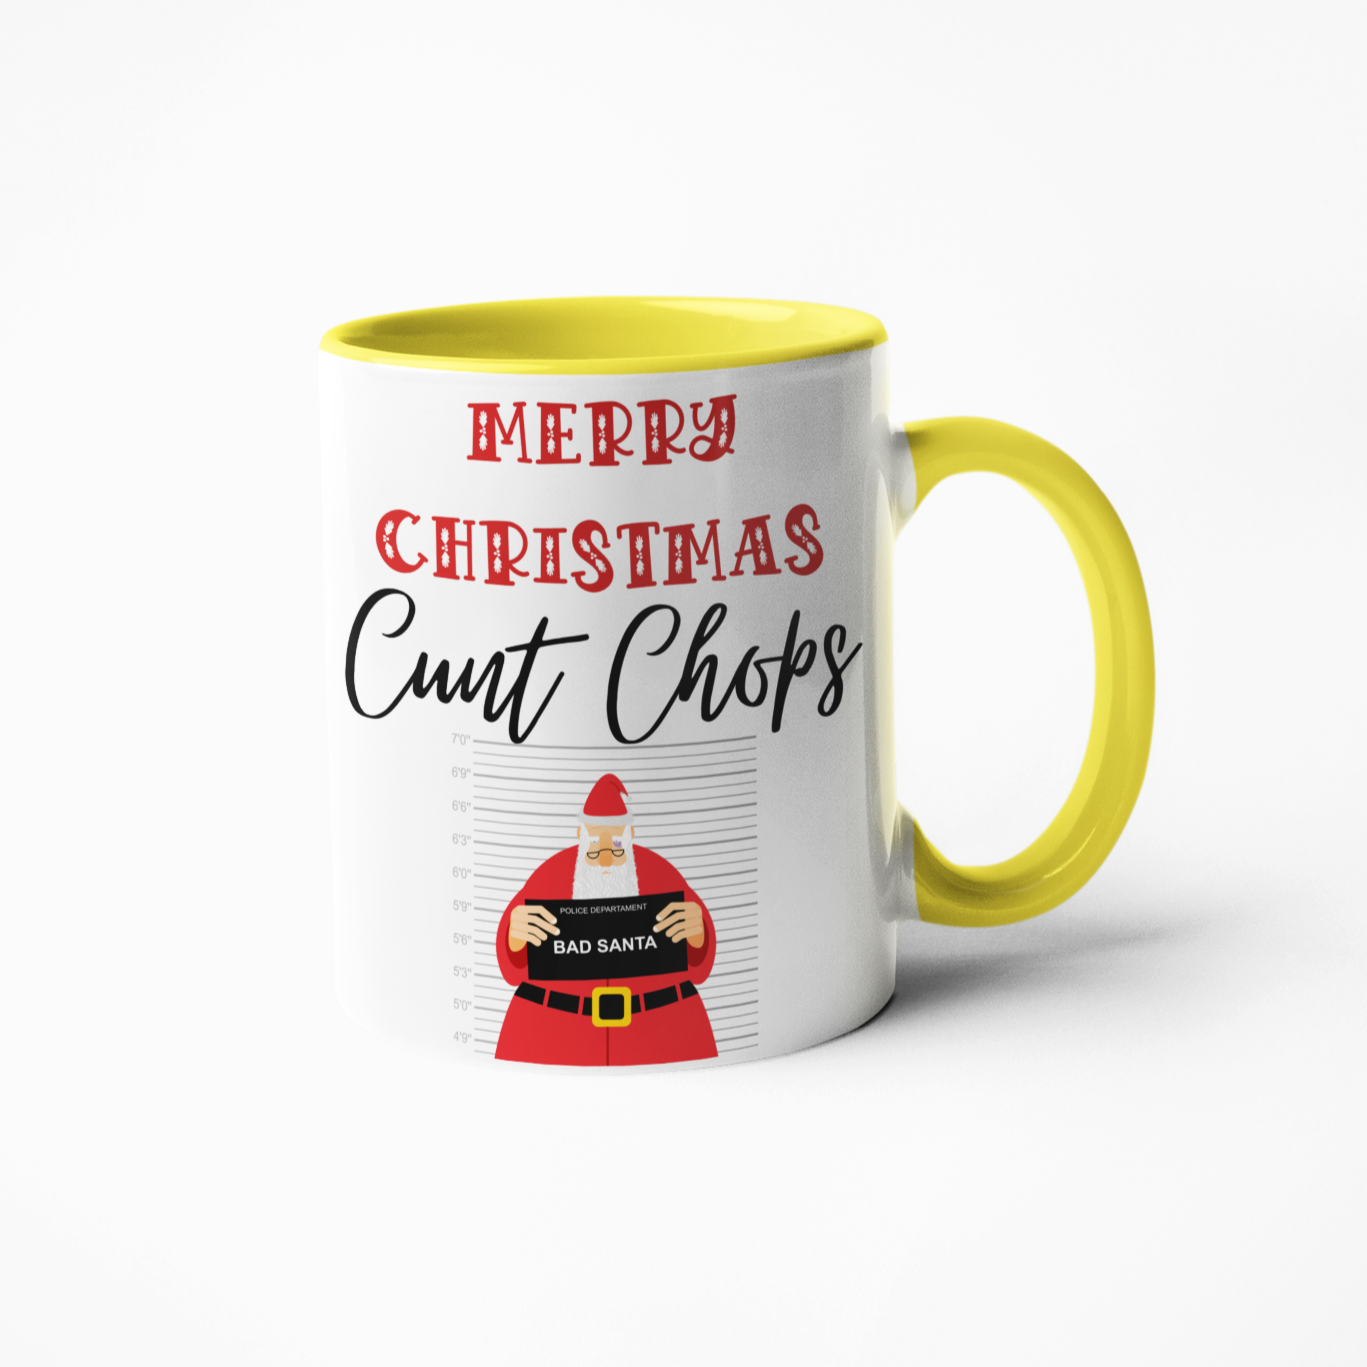 Merry Christmas cunt chops rude yellow mug